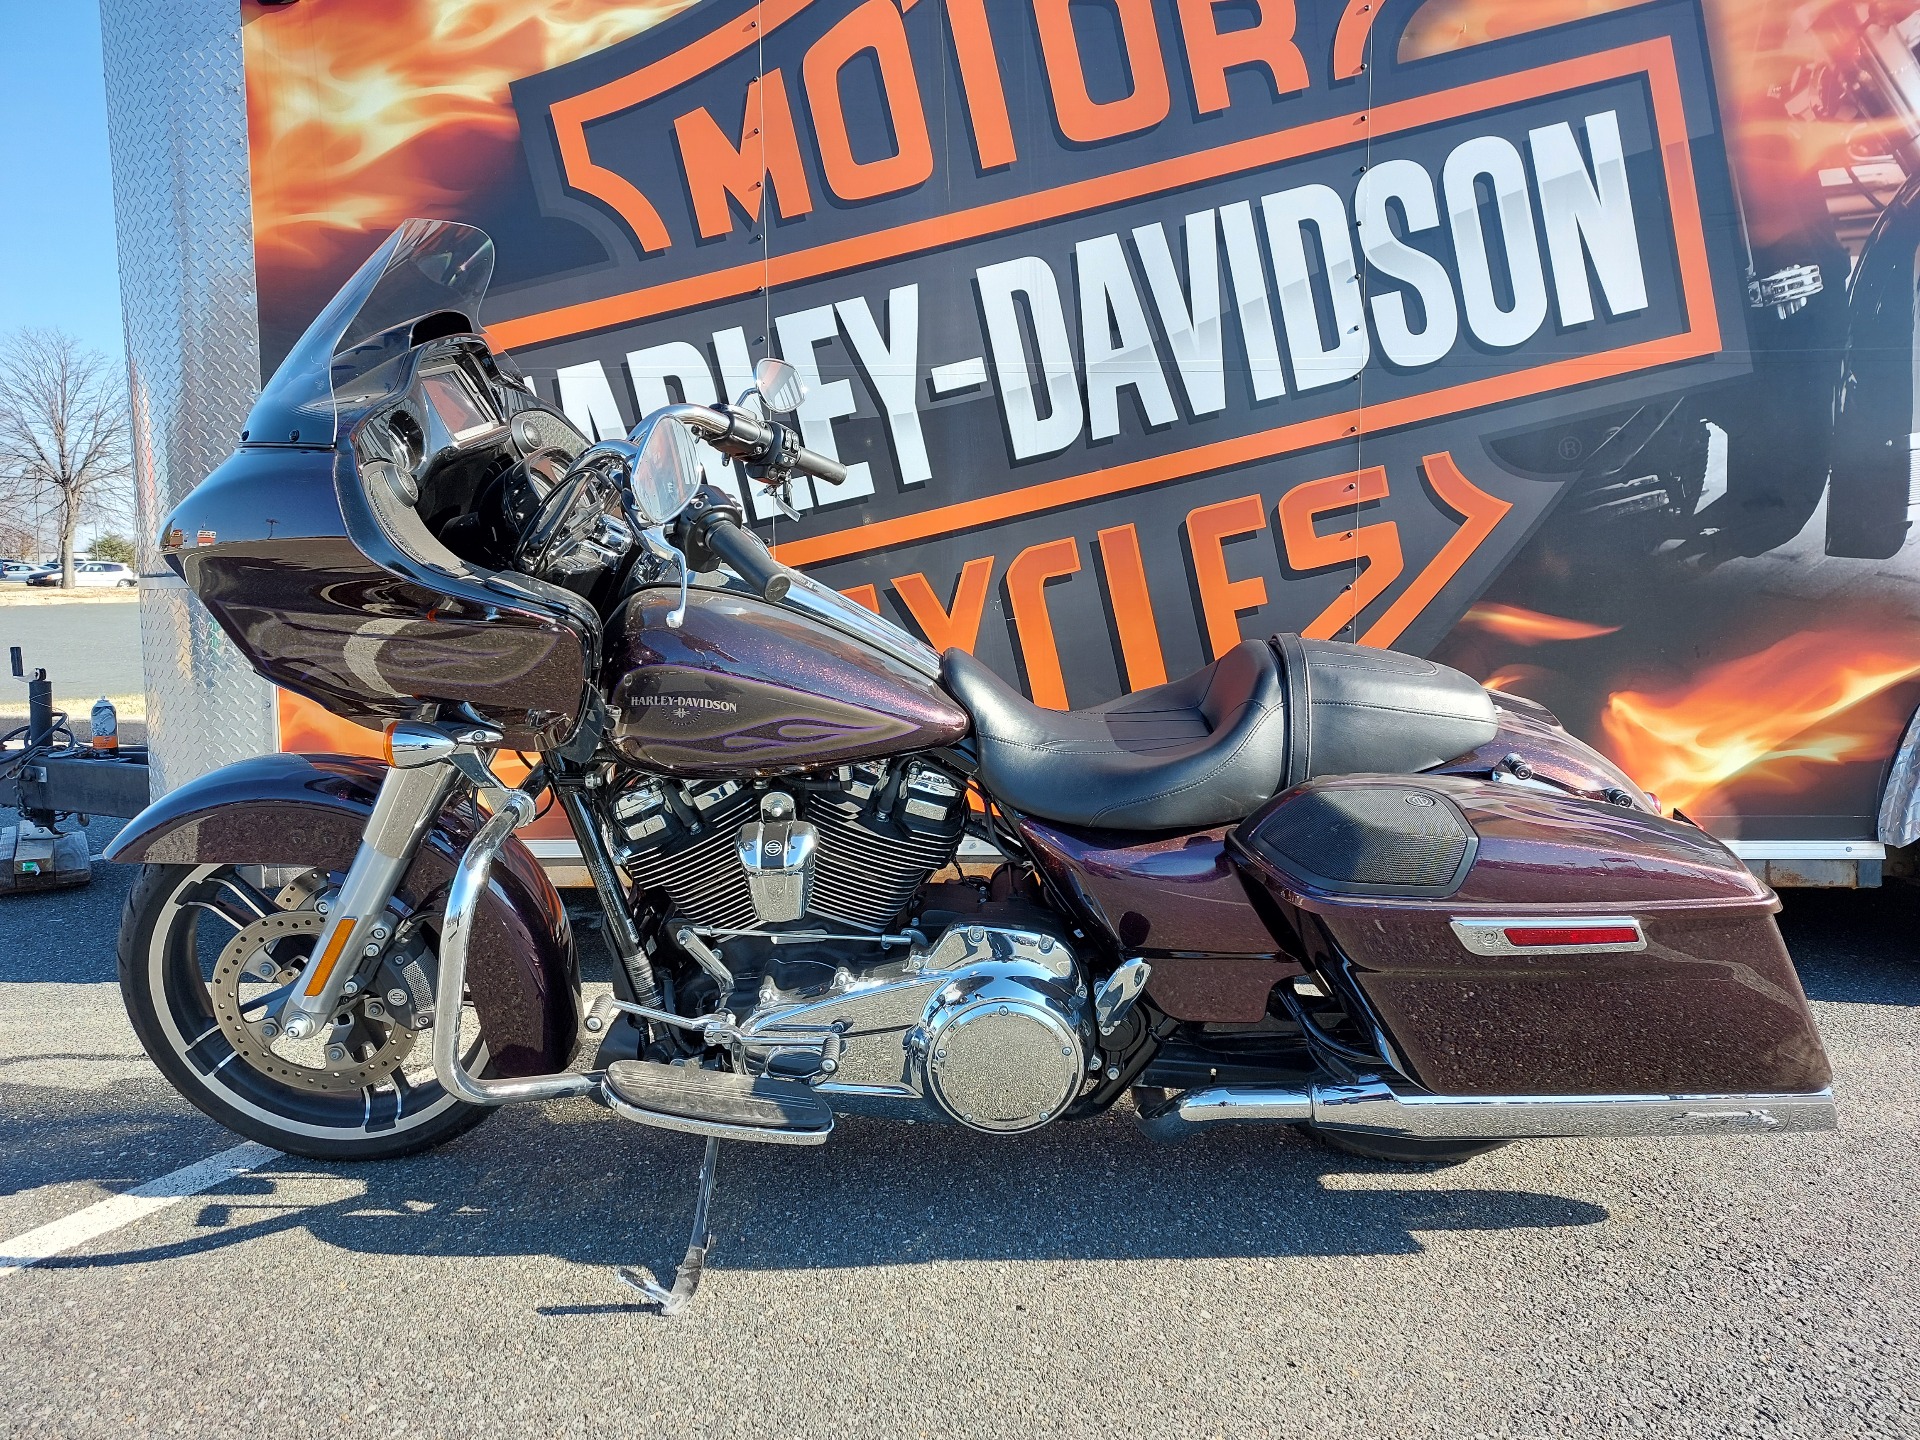 2017 Harley-Davidson Road Glide® Special in Fredericksburg, Virginia - Photo 2